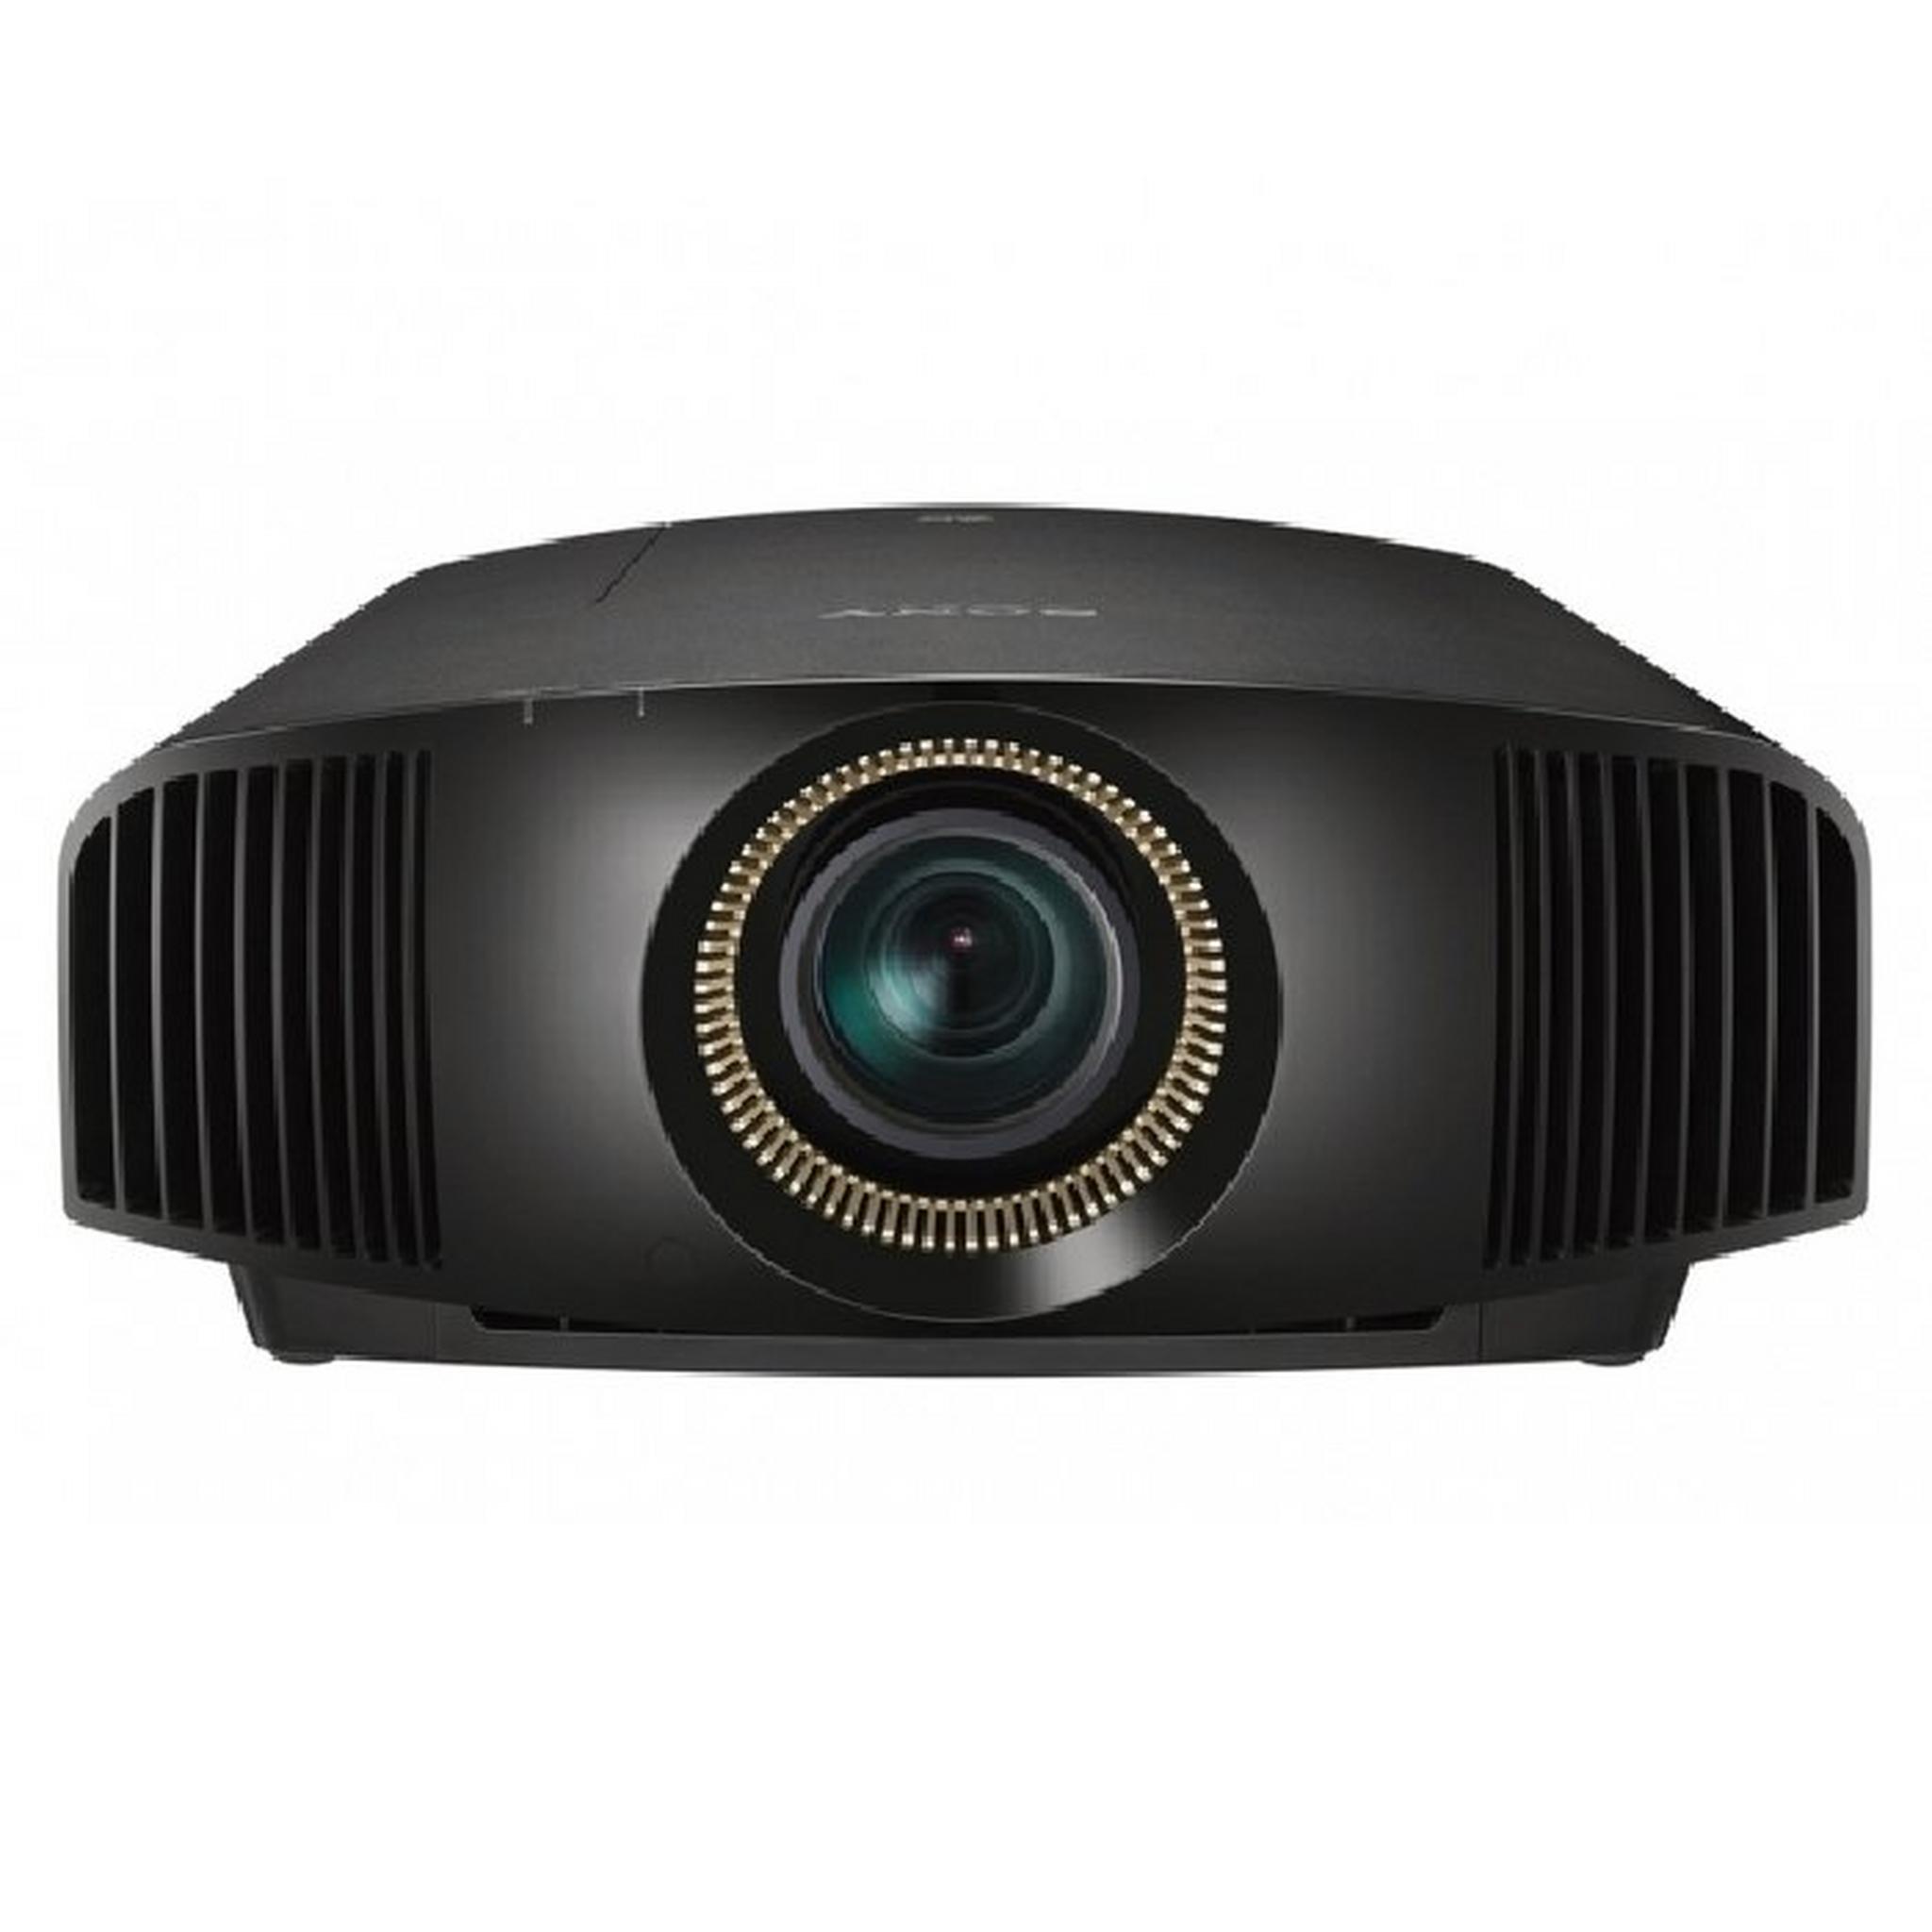 Sony 4K SXRD Home Cinema Projector (VPL-VW590ES) - Black